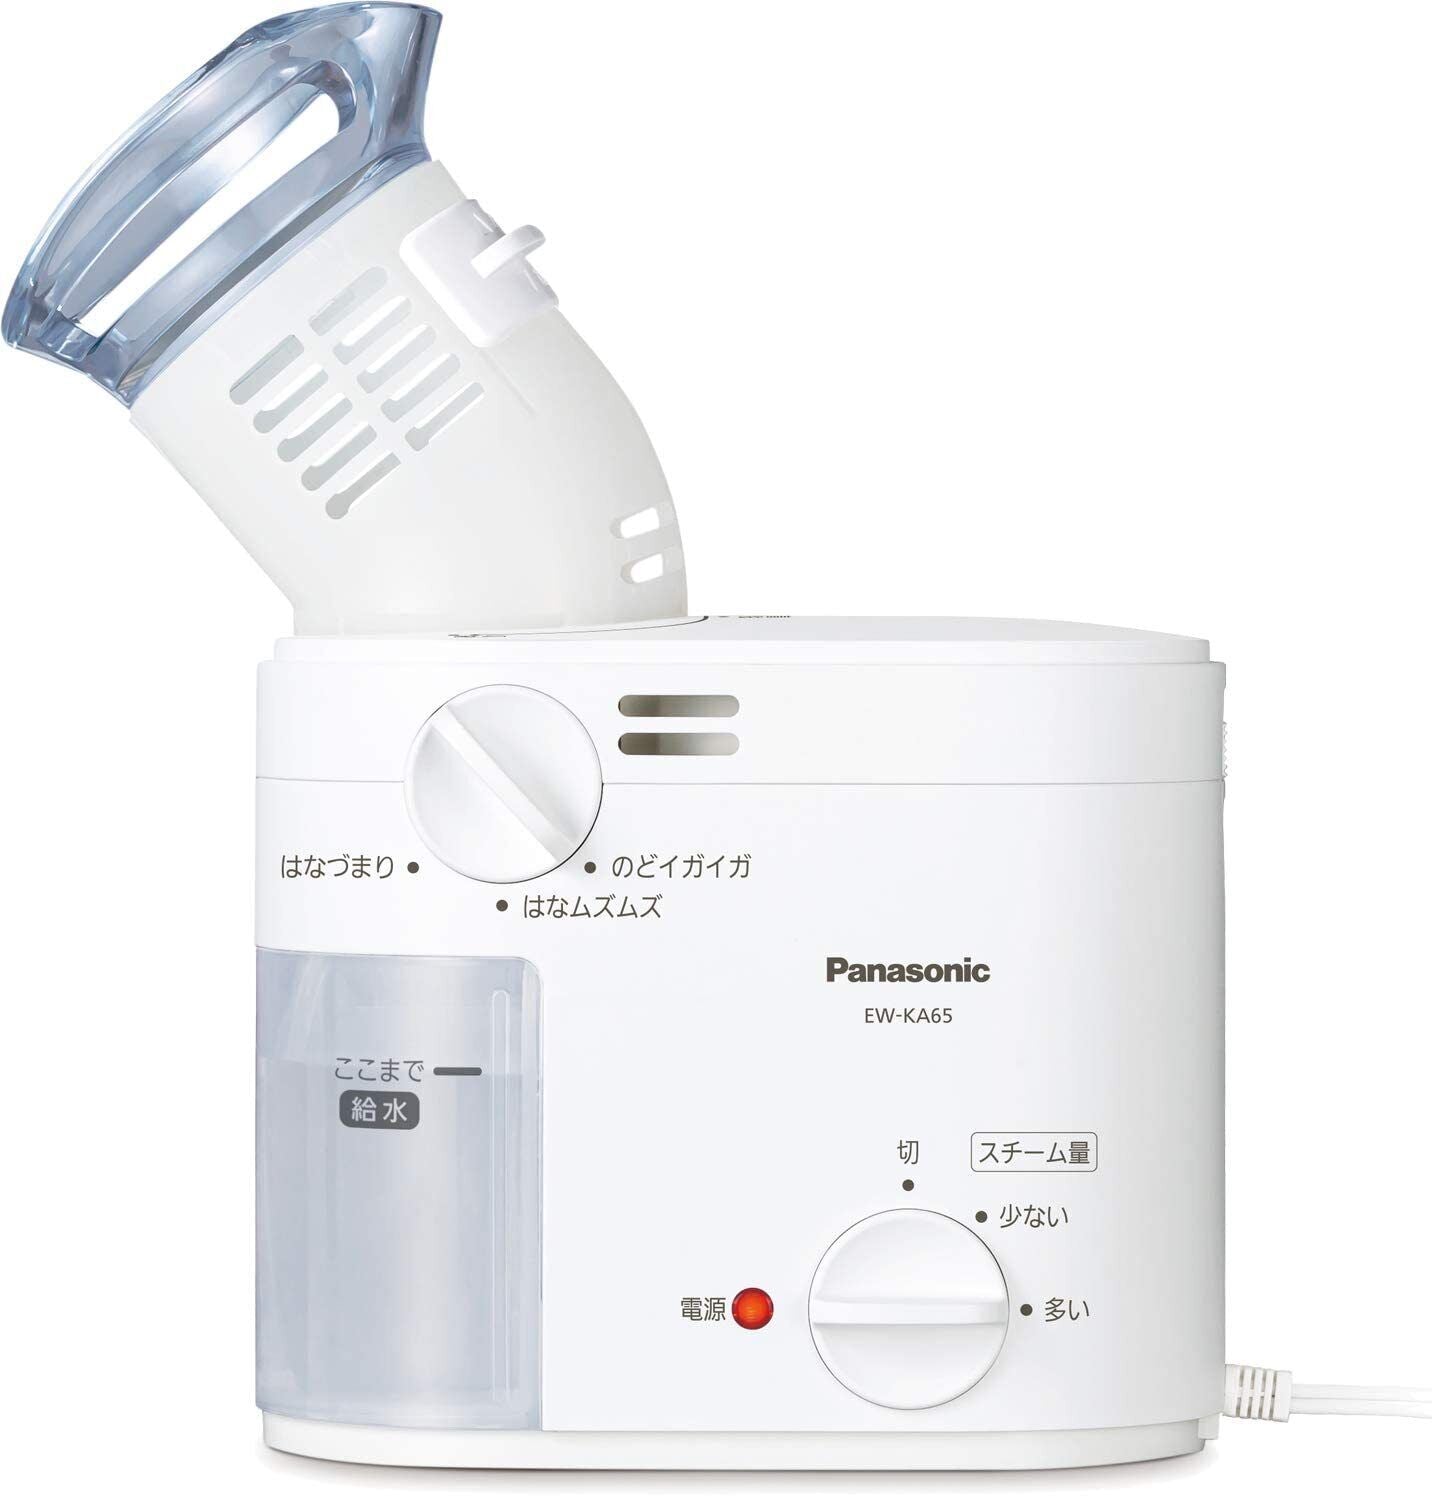 EW-KA65-W Panasonic Steam Inhaler Approx. 43 ℃ Steam White 100V New